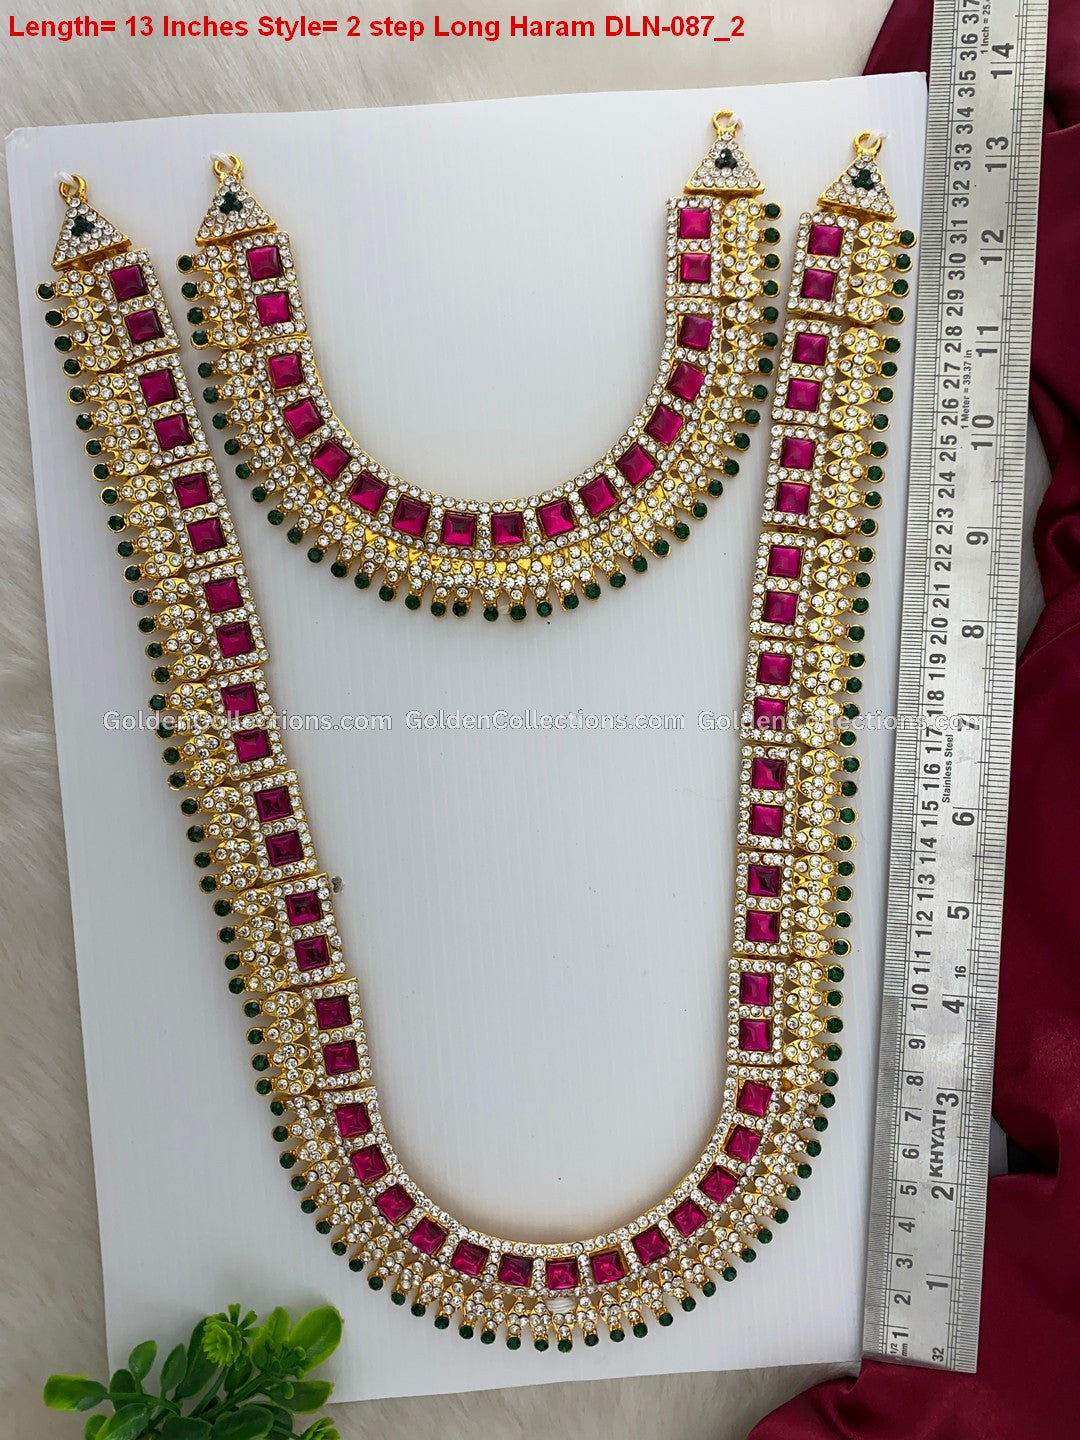 Divine Amman Stone Long Haram - Hindu Deity Jewellery DLN-087 2